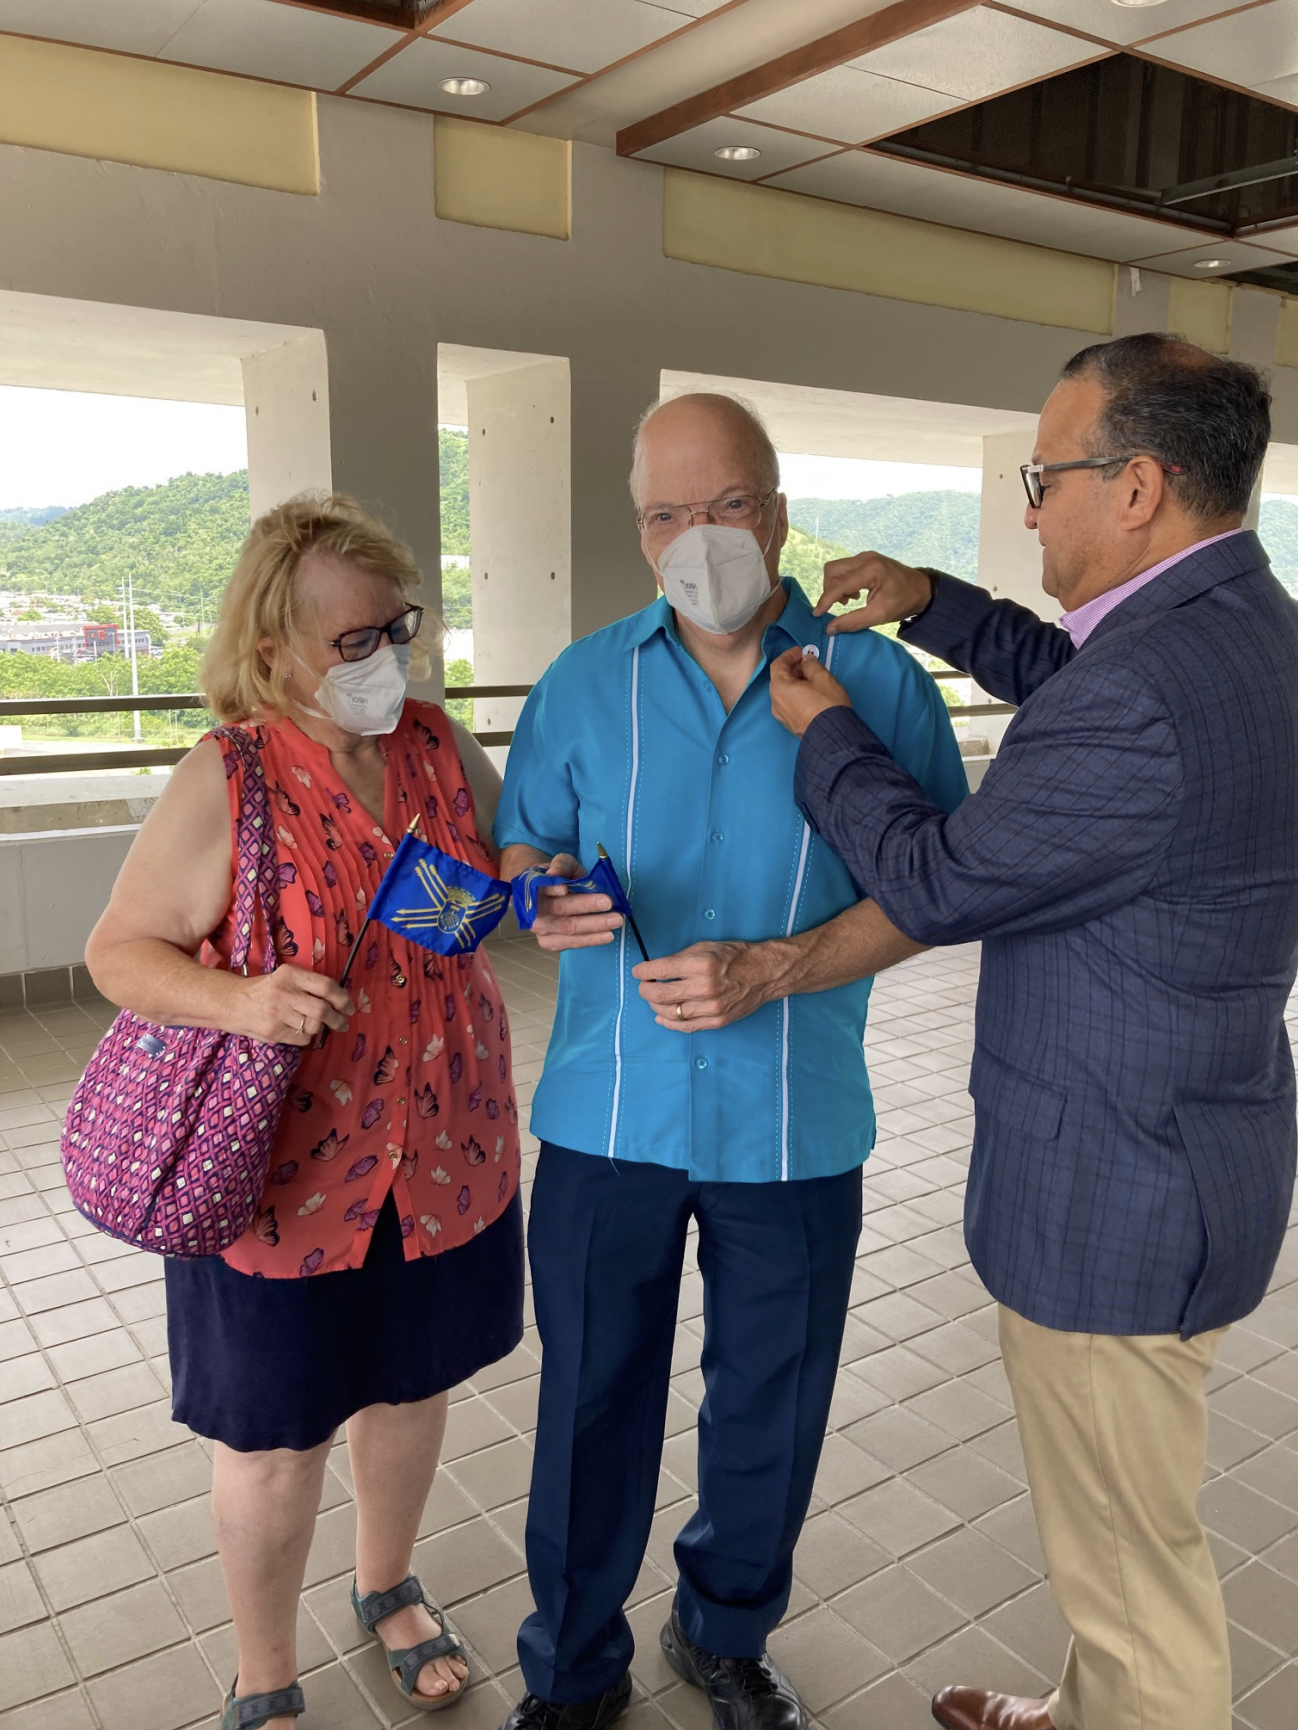 Mayor of Caguas pins City of Caguas on John Knight of Hermandad